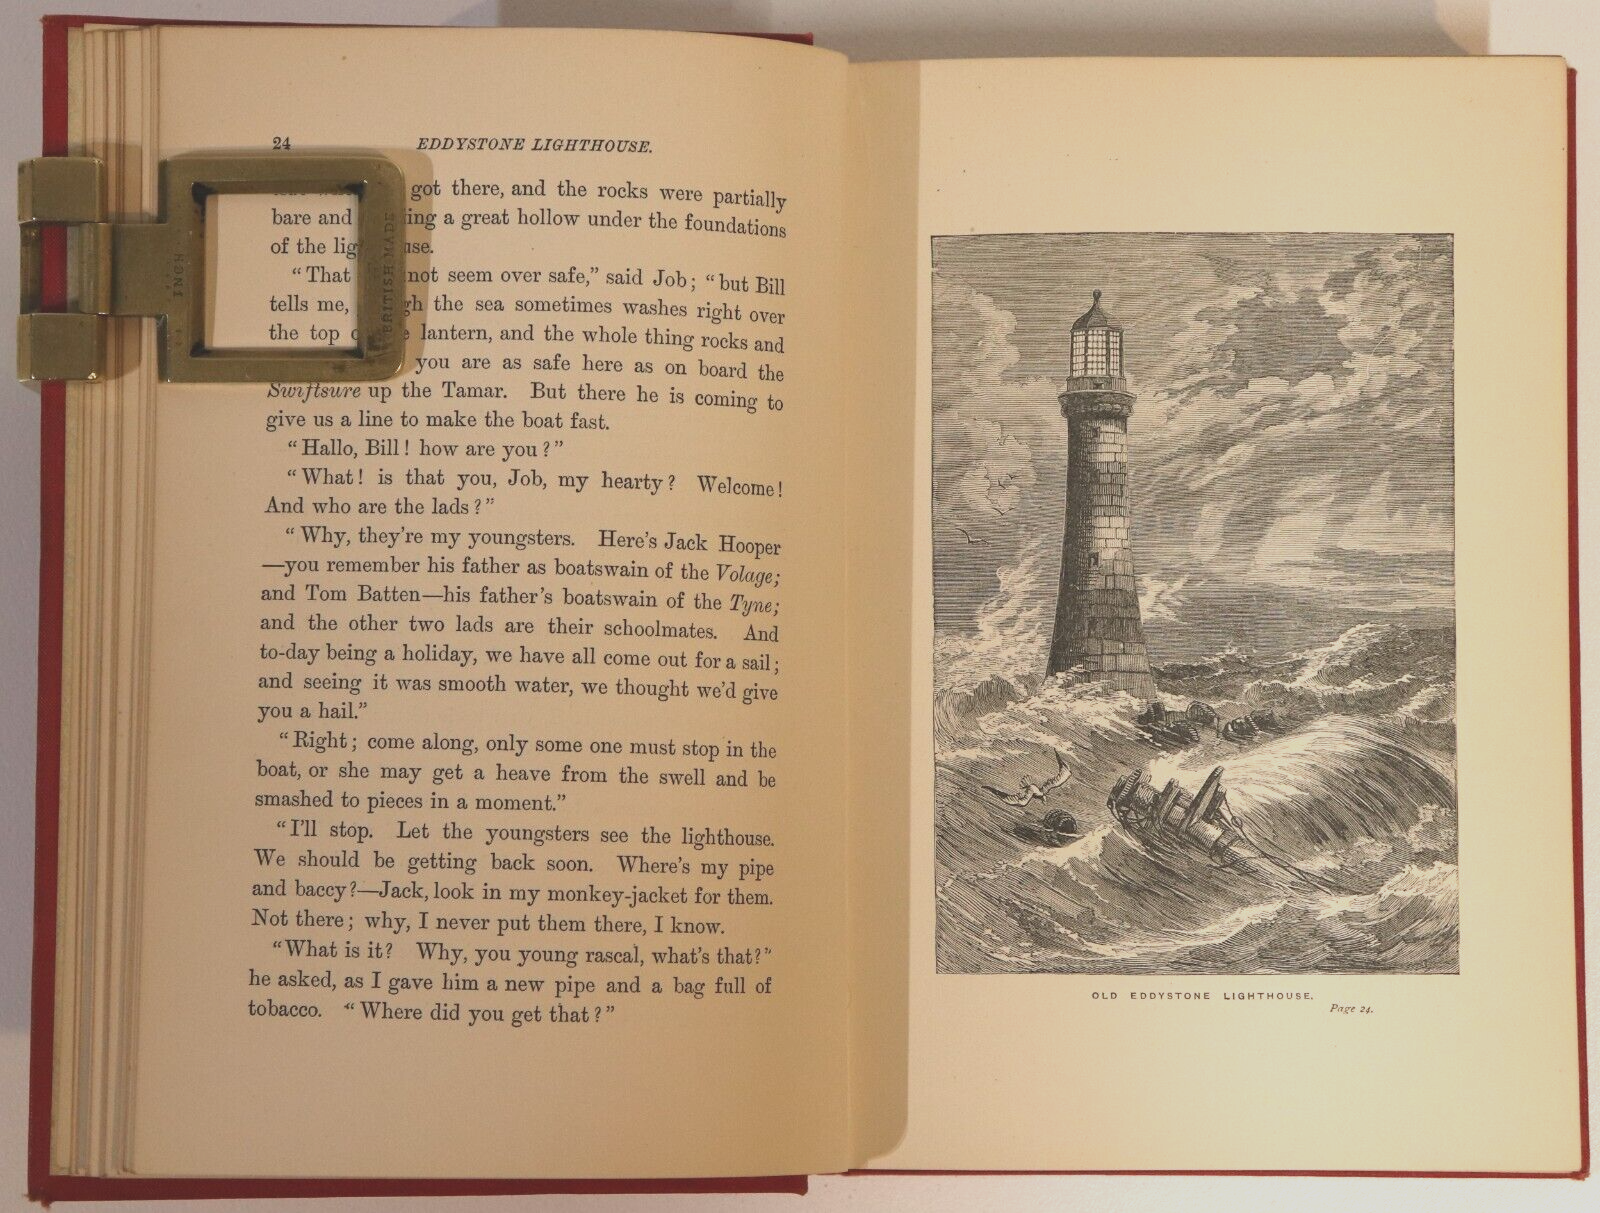 1894 Jack Hooper Adventures At Sea & South Africa Antiquarian Adventure Book